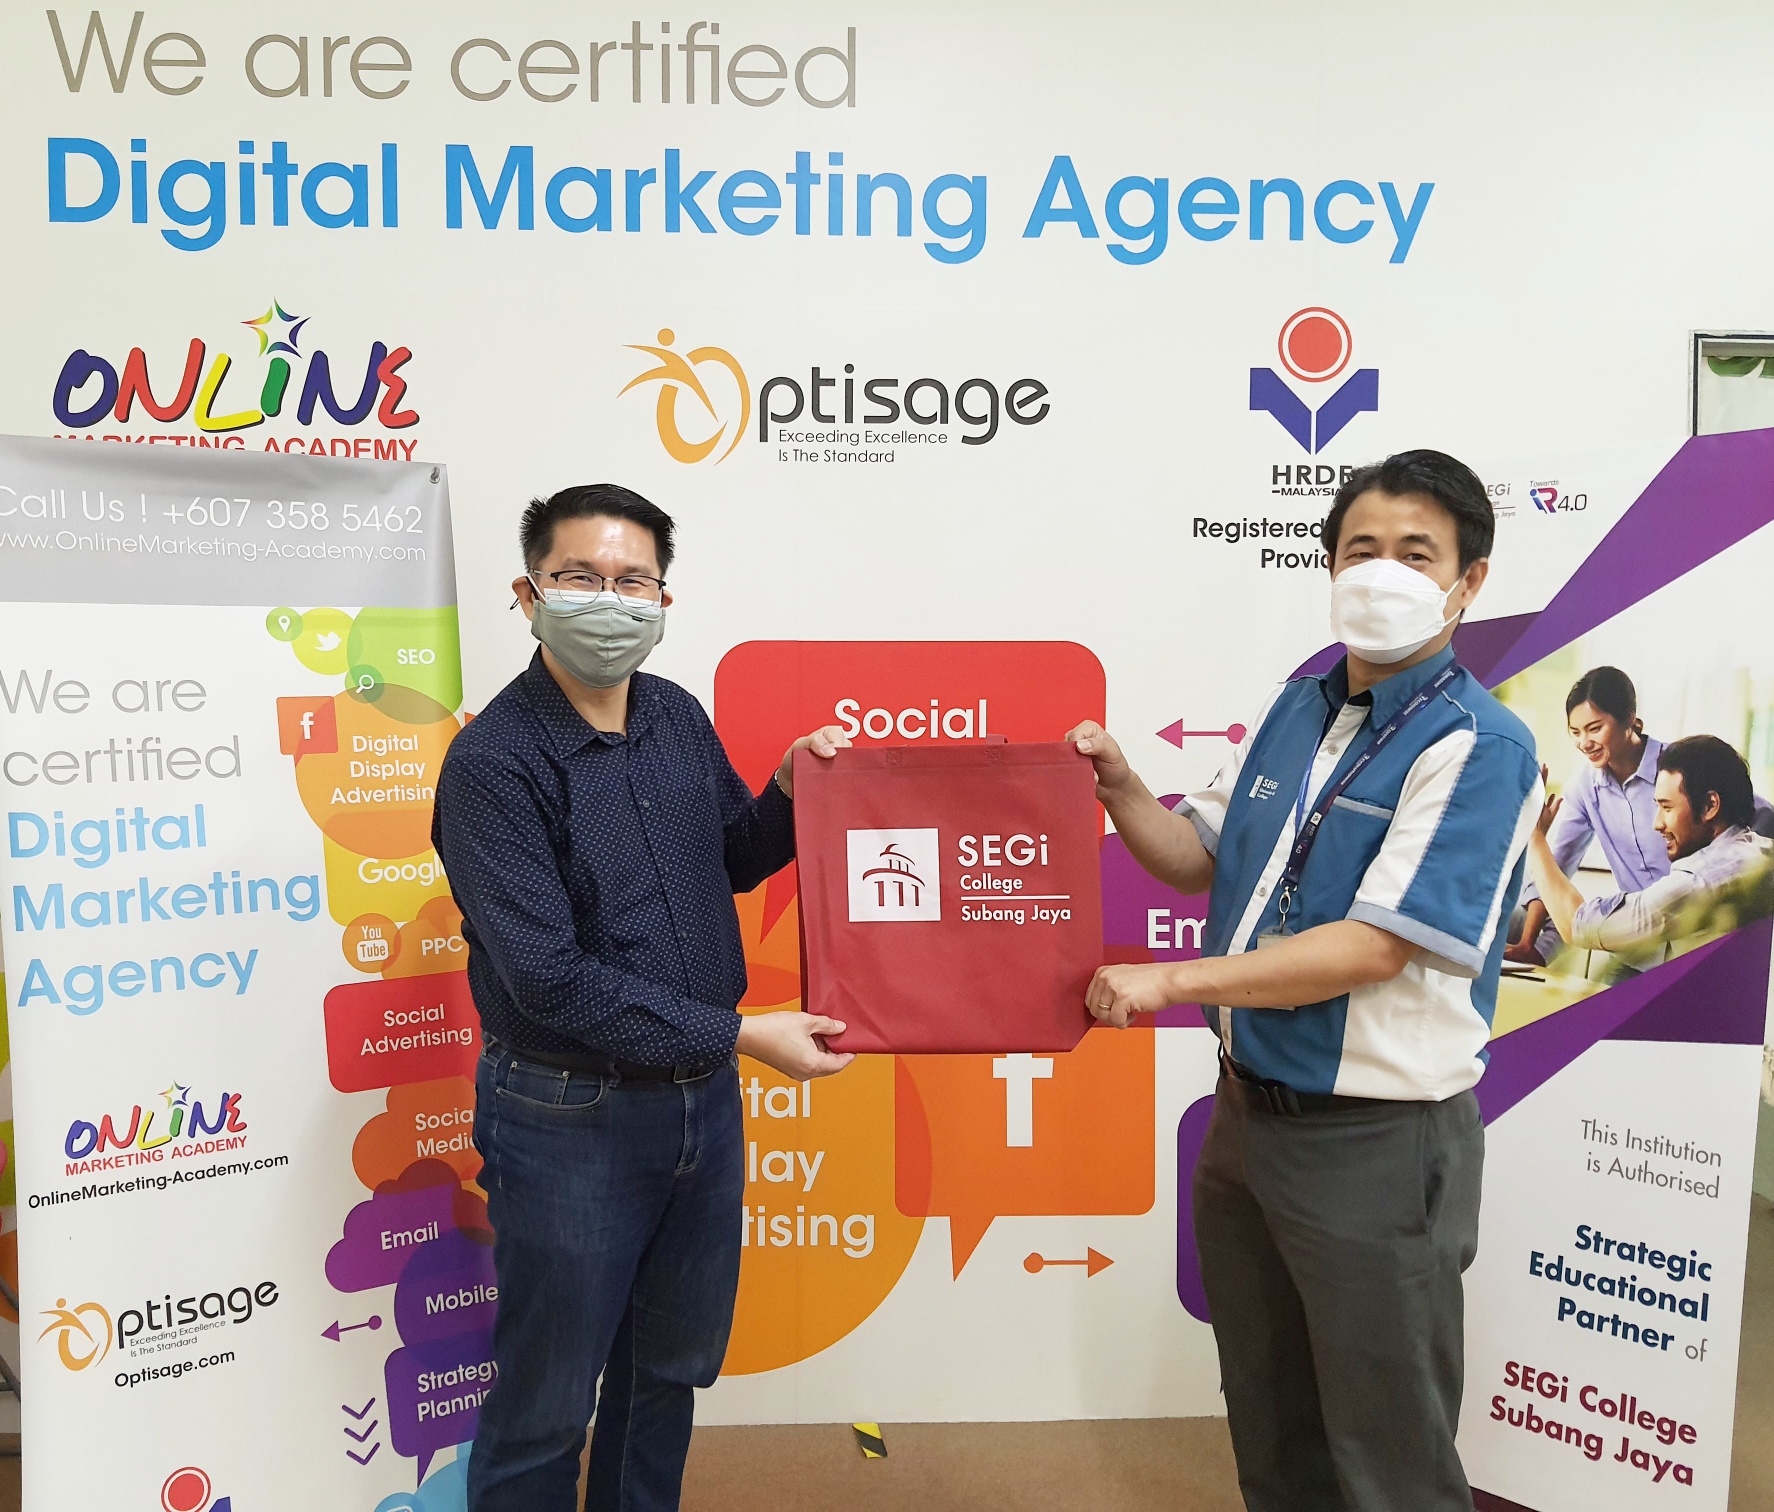 Strategic Digital Marketing Course Educational Partner of SEGi College Subang Jaya